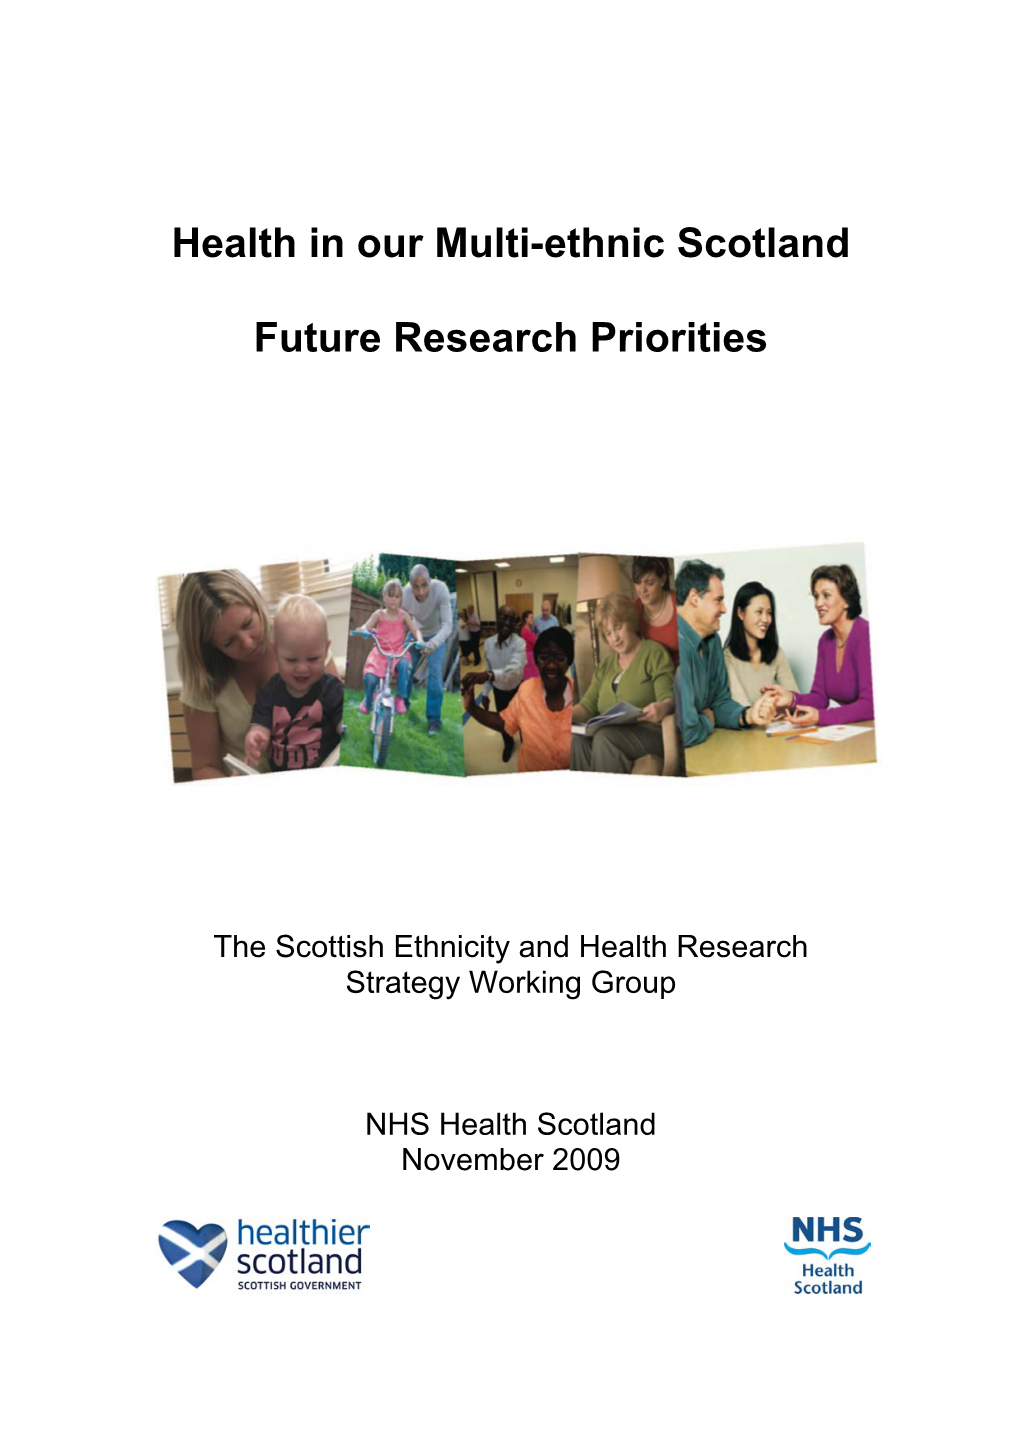 Health in Our Multi-Ethnic Scotland Future Research Priorities